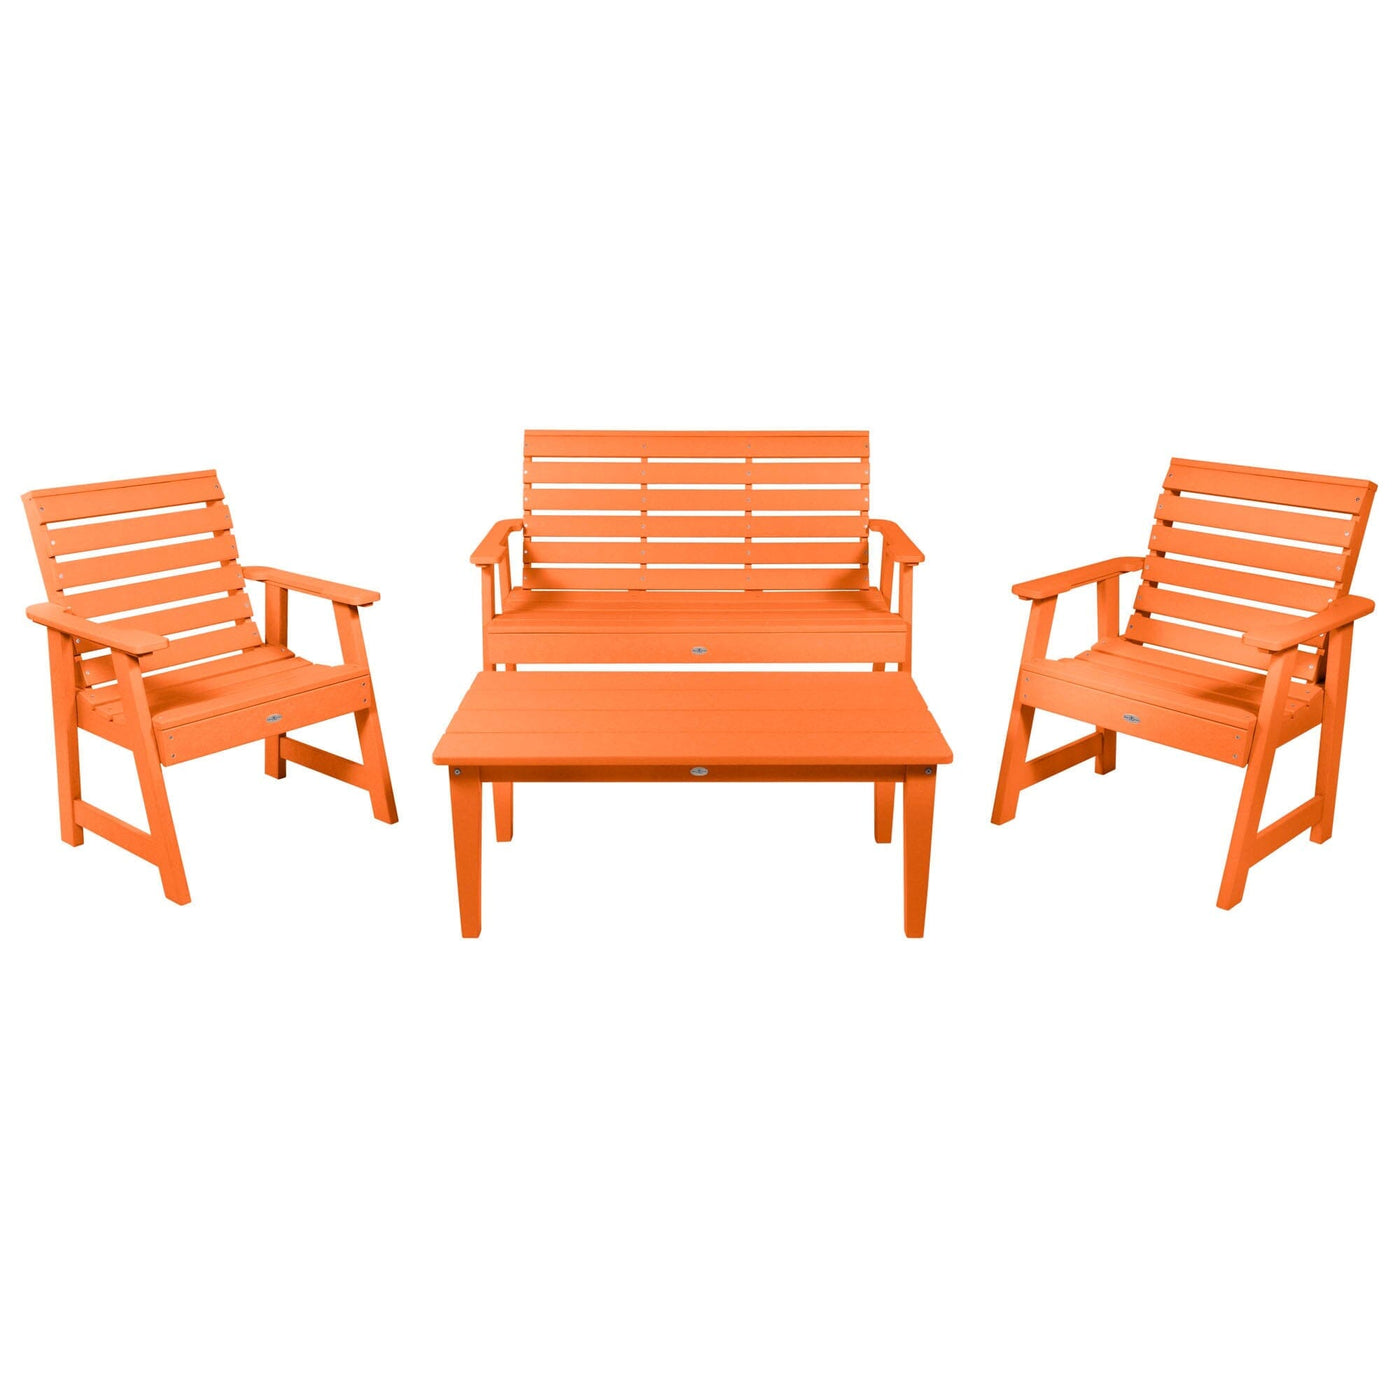 Riverside Garden Bench 4ft, 2 Garden Chairs, and Conversation Table Set Kitted Set Bahia Verde Outdoors Citrus Orange 